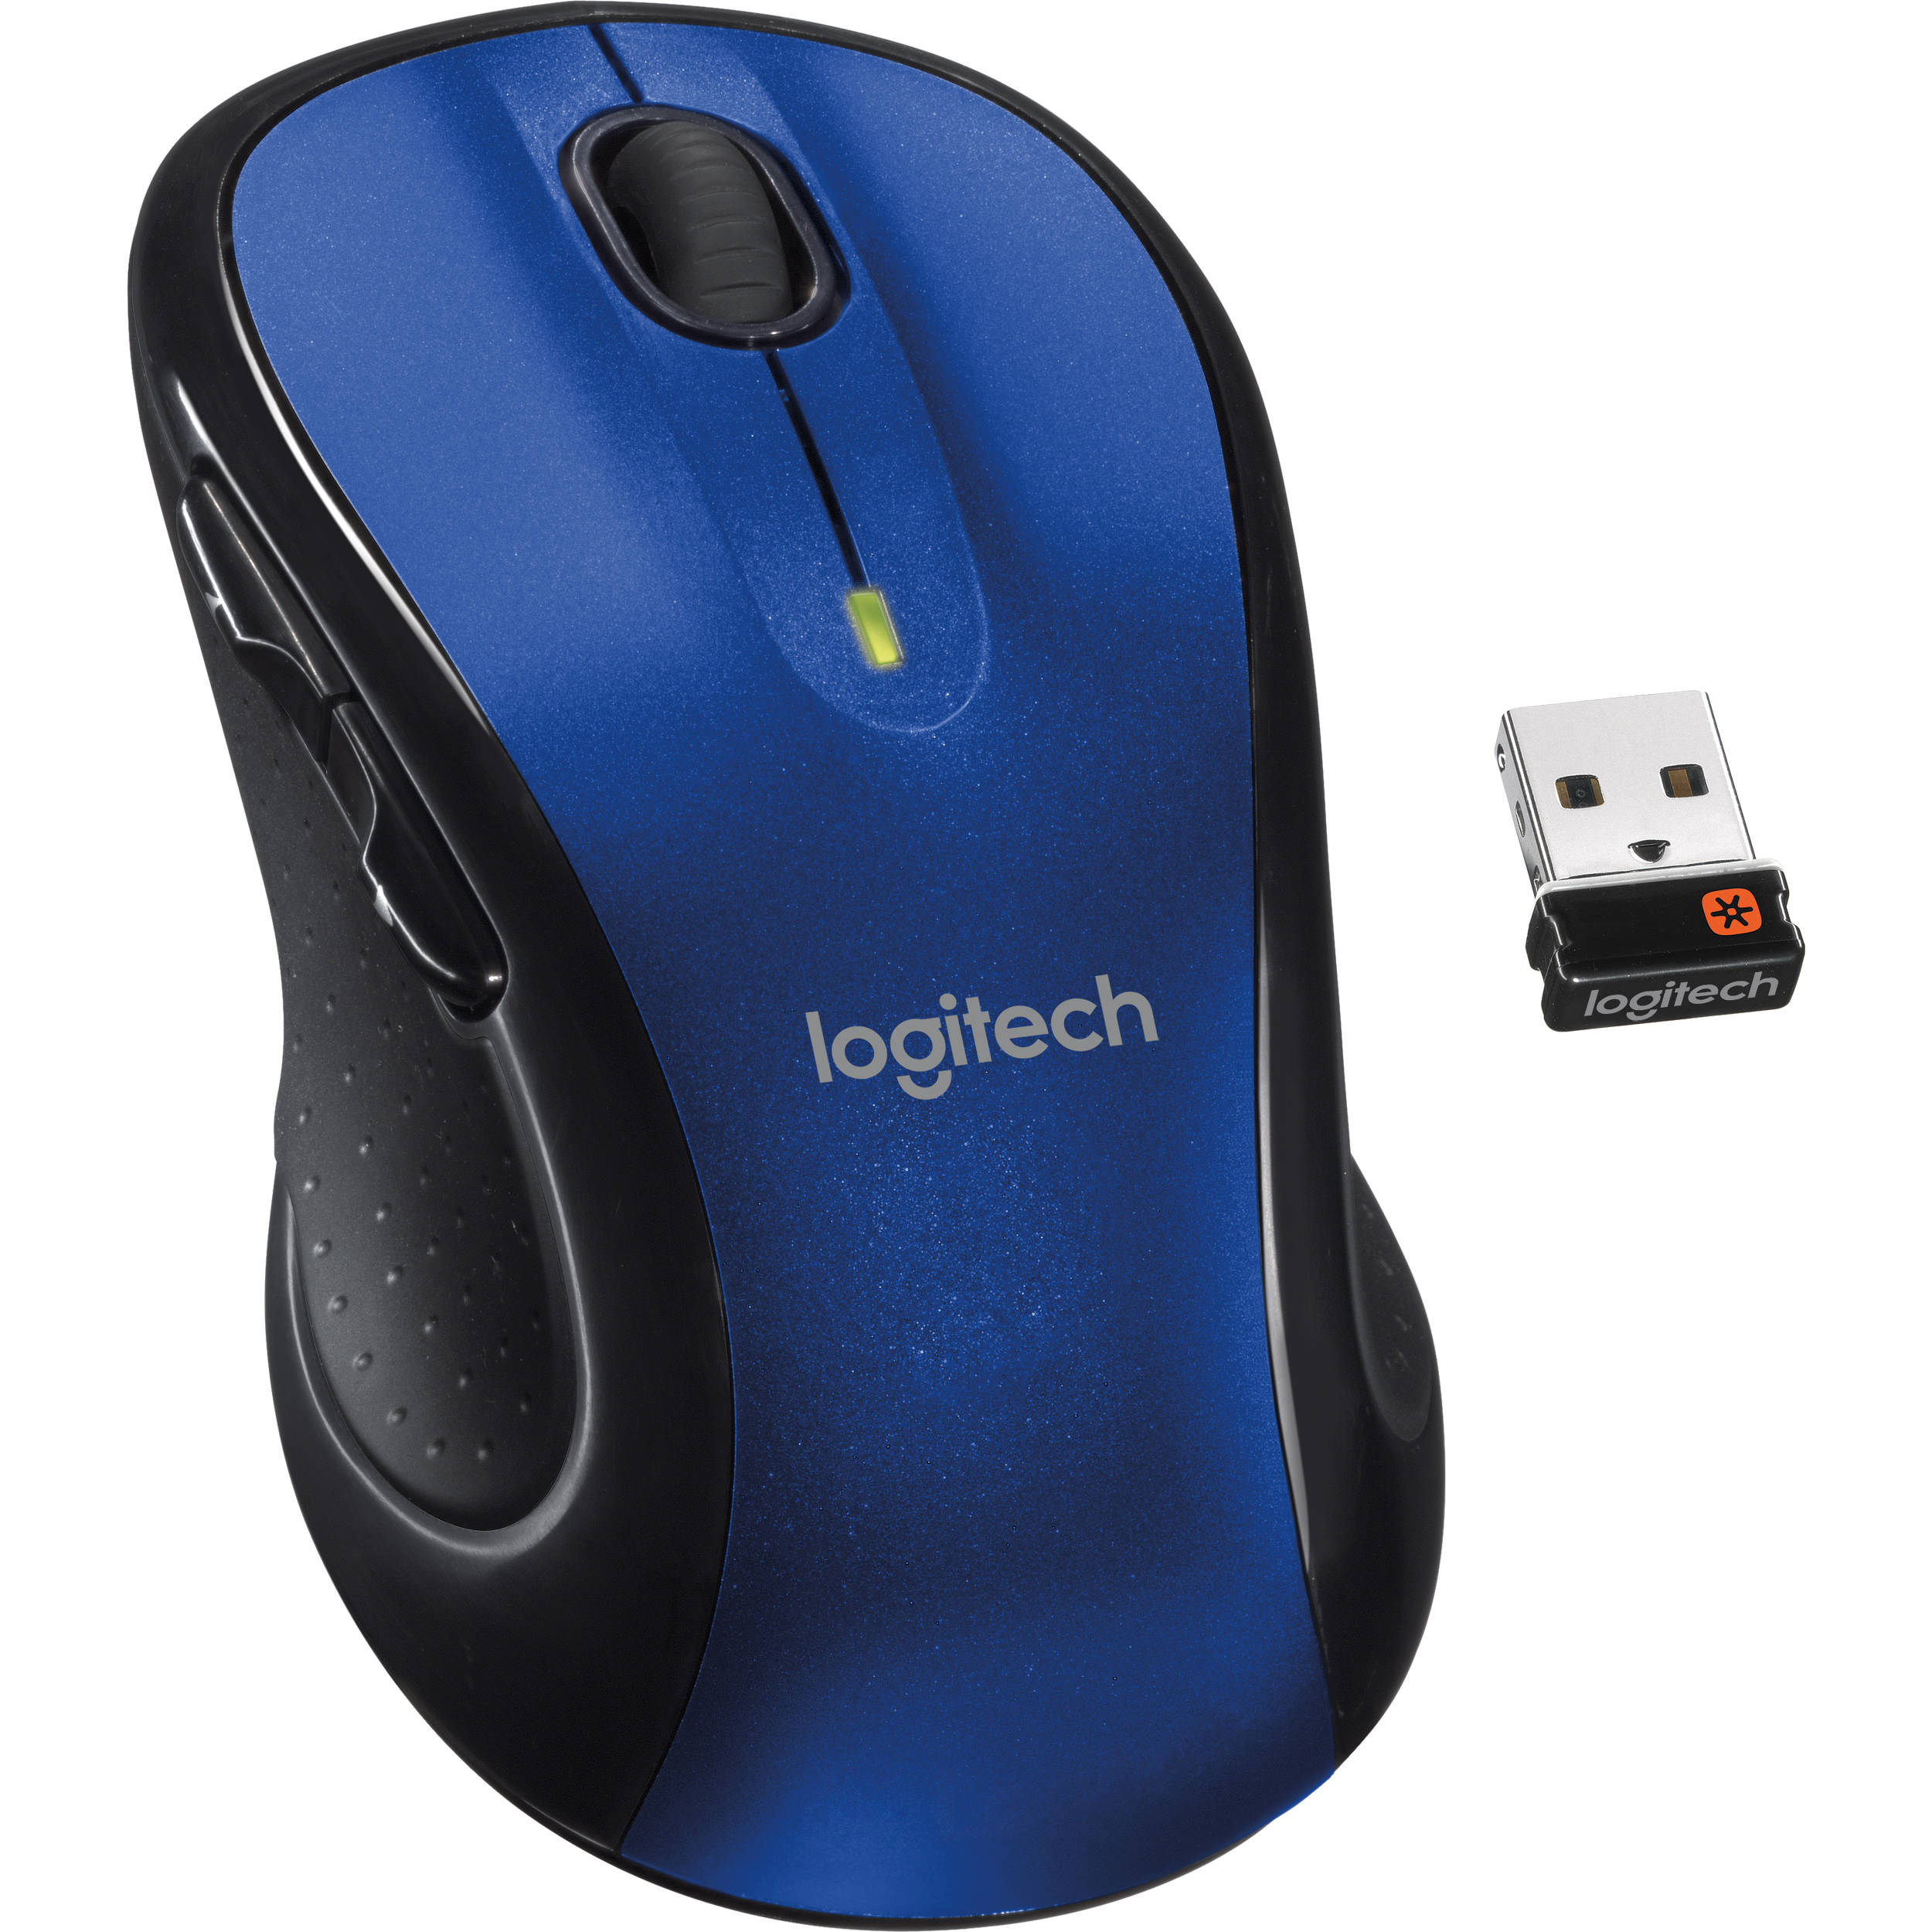 Logitech m510 mouse software download